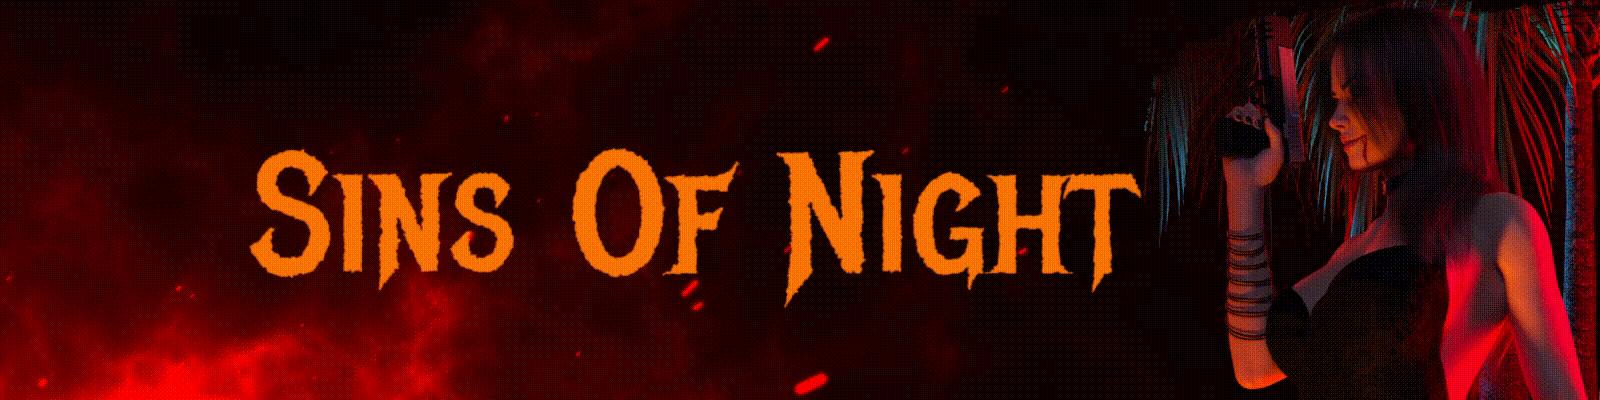 Sins Of Night poster